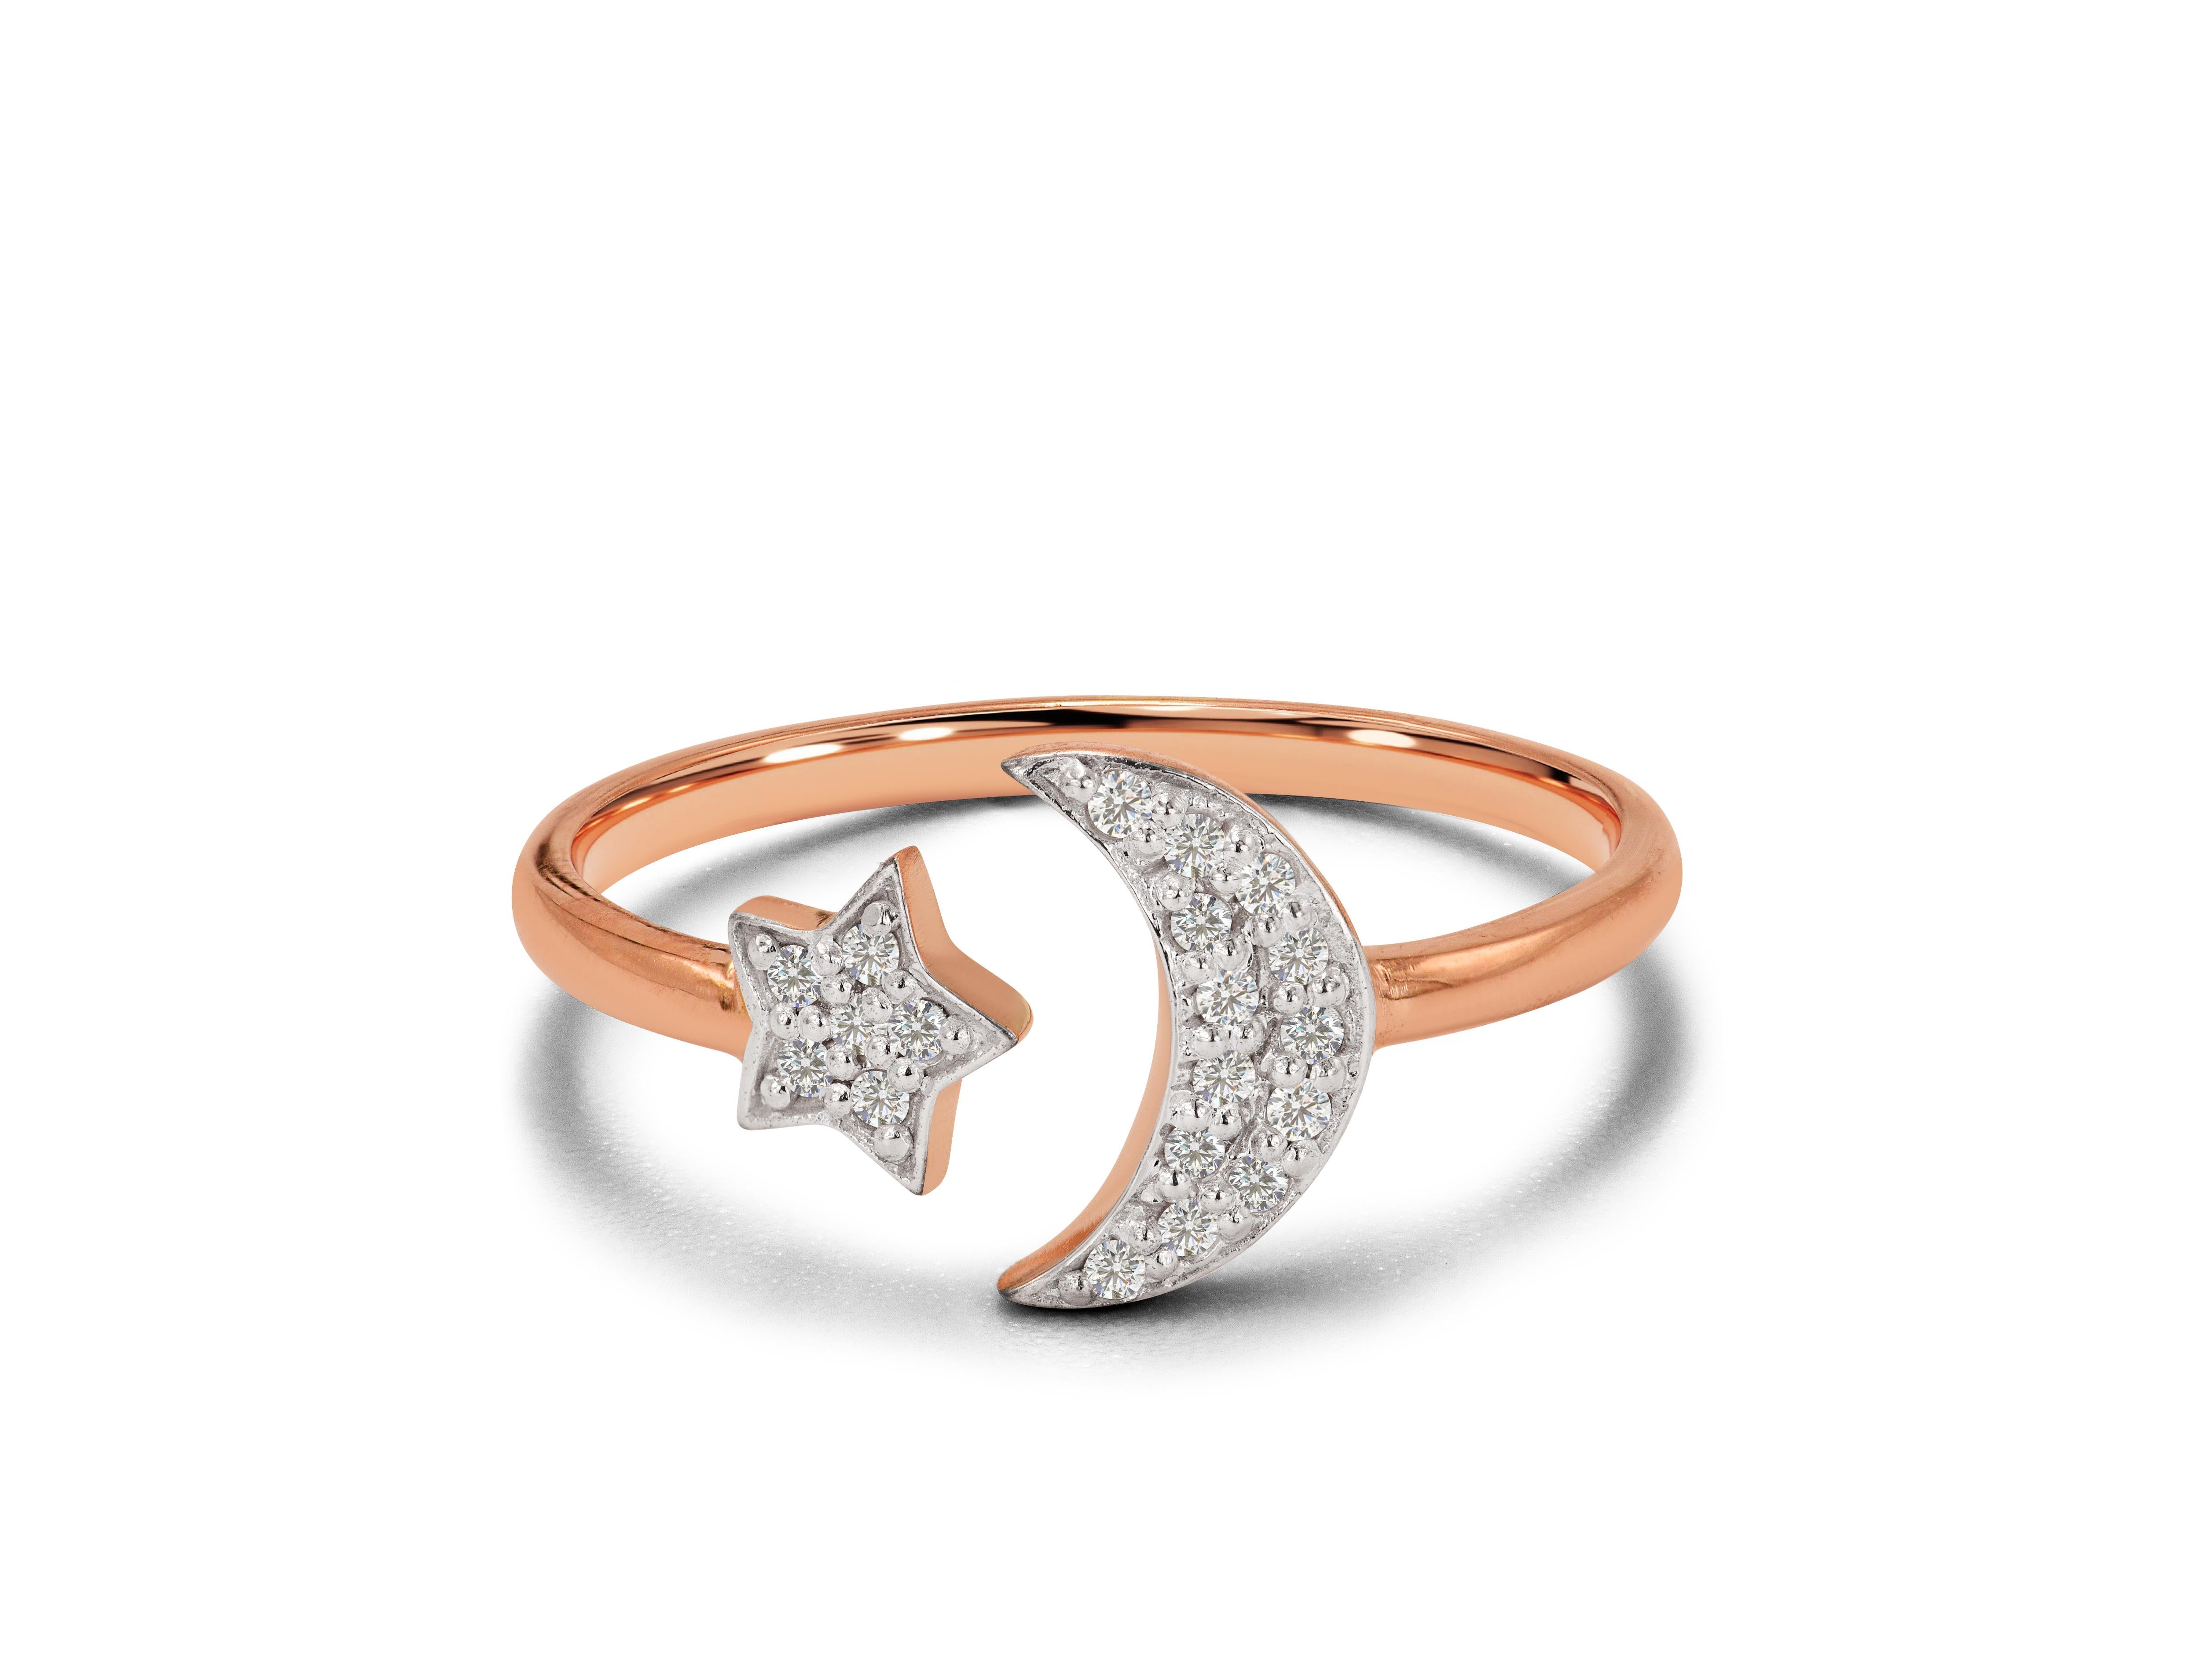 18k Gold 0.06 Carat Diamond Moon and Star Ring